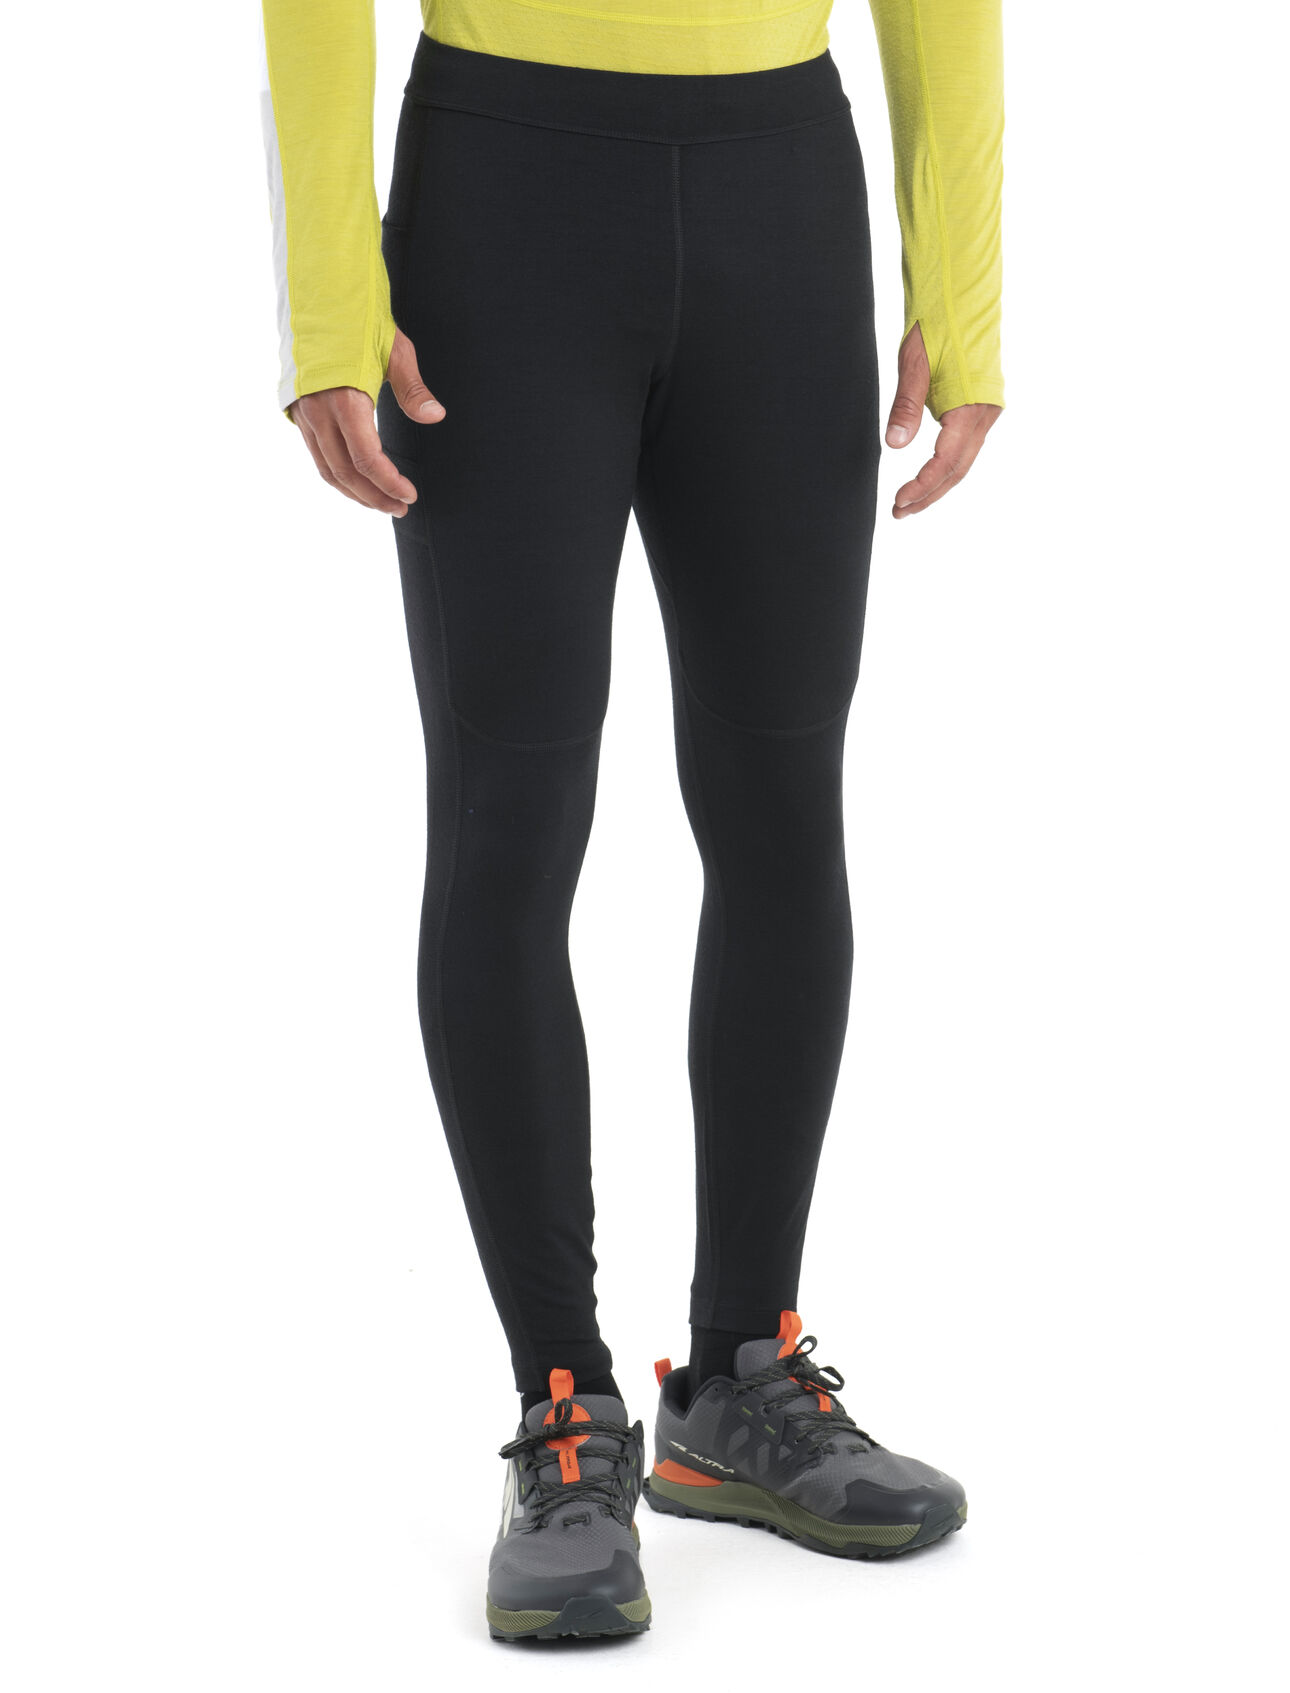 Running Tights & Leggings. Nike CA